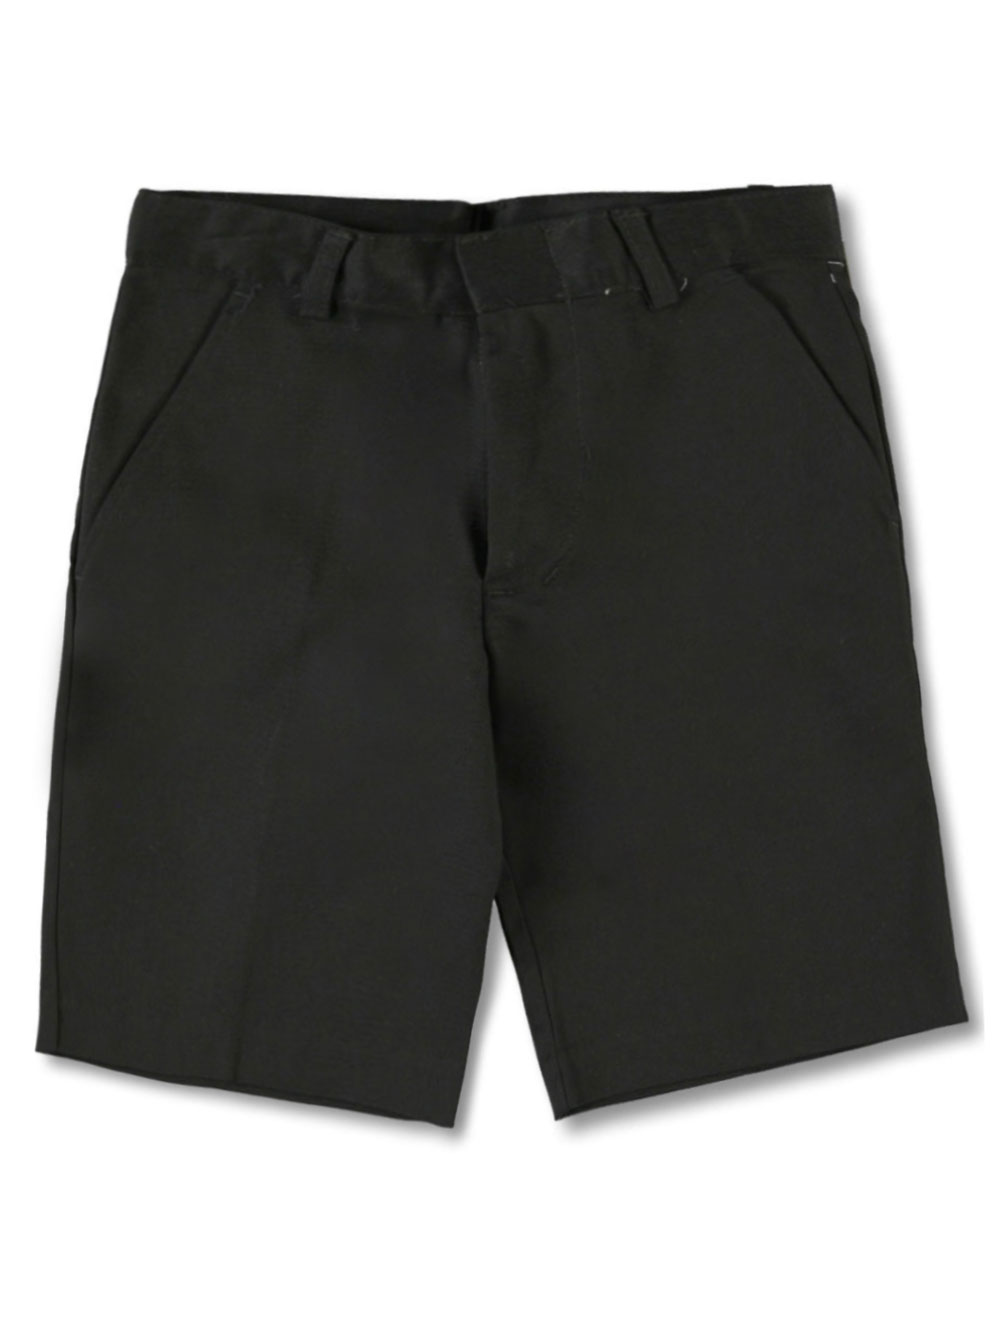 Size 14 Shorts/Skorts for Girls